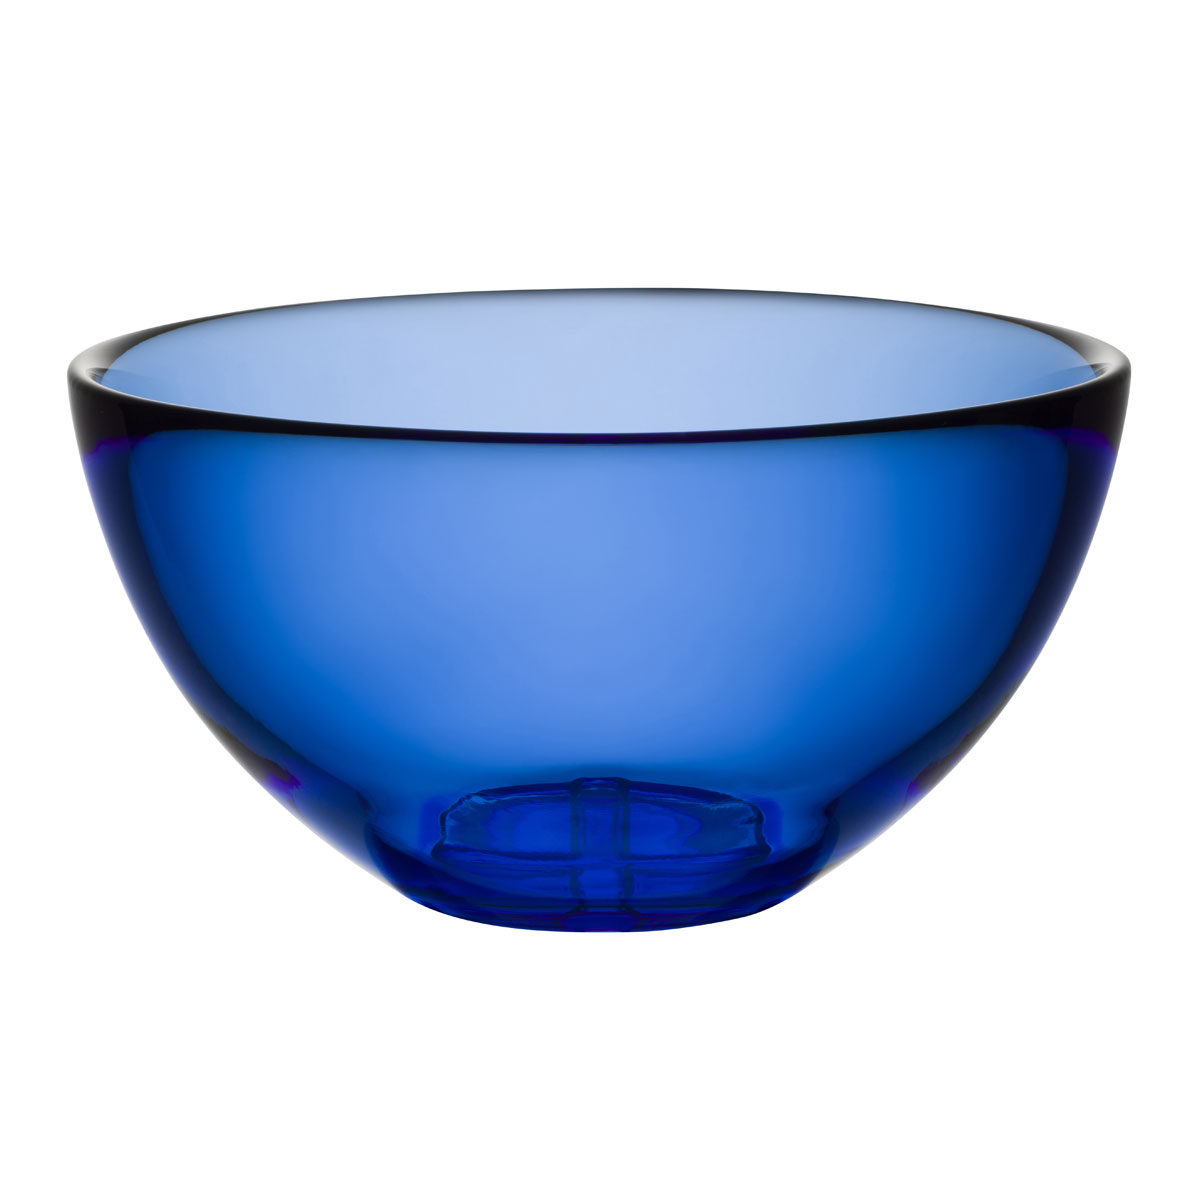 Kosta Boda Bruk Crystal Large Serving Bowl, Water Blue